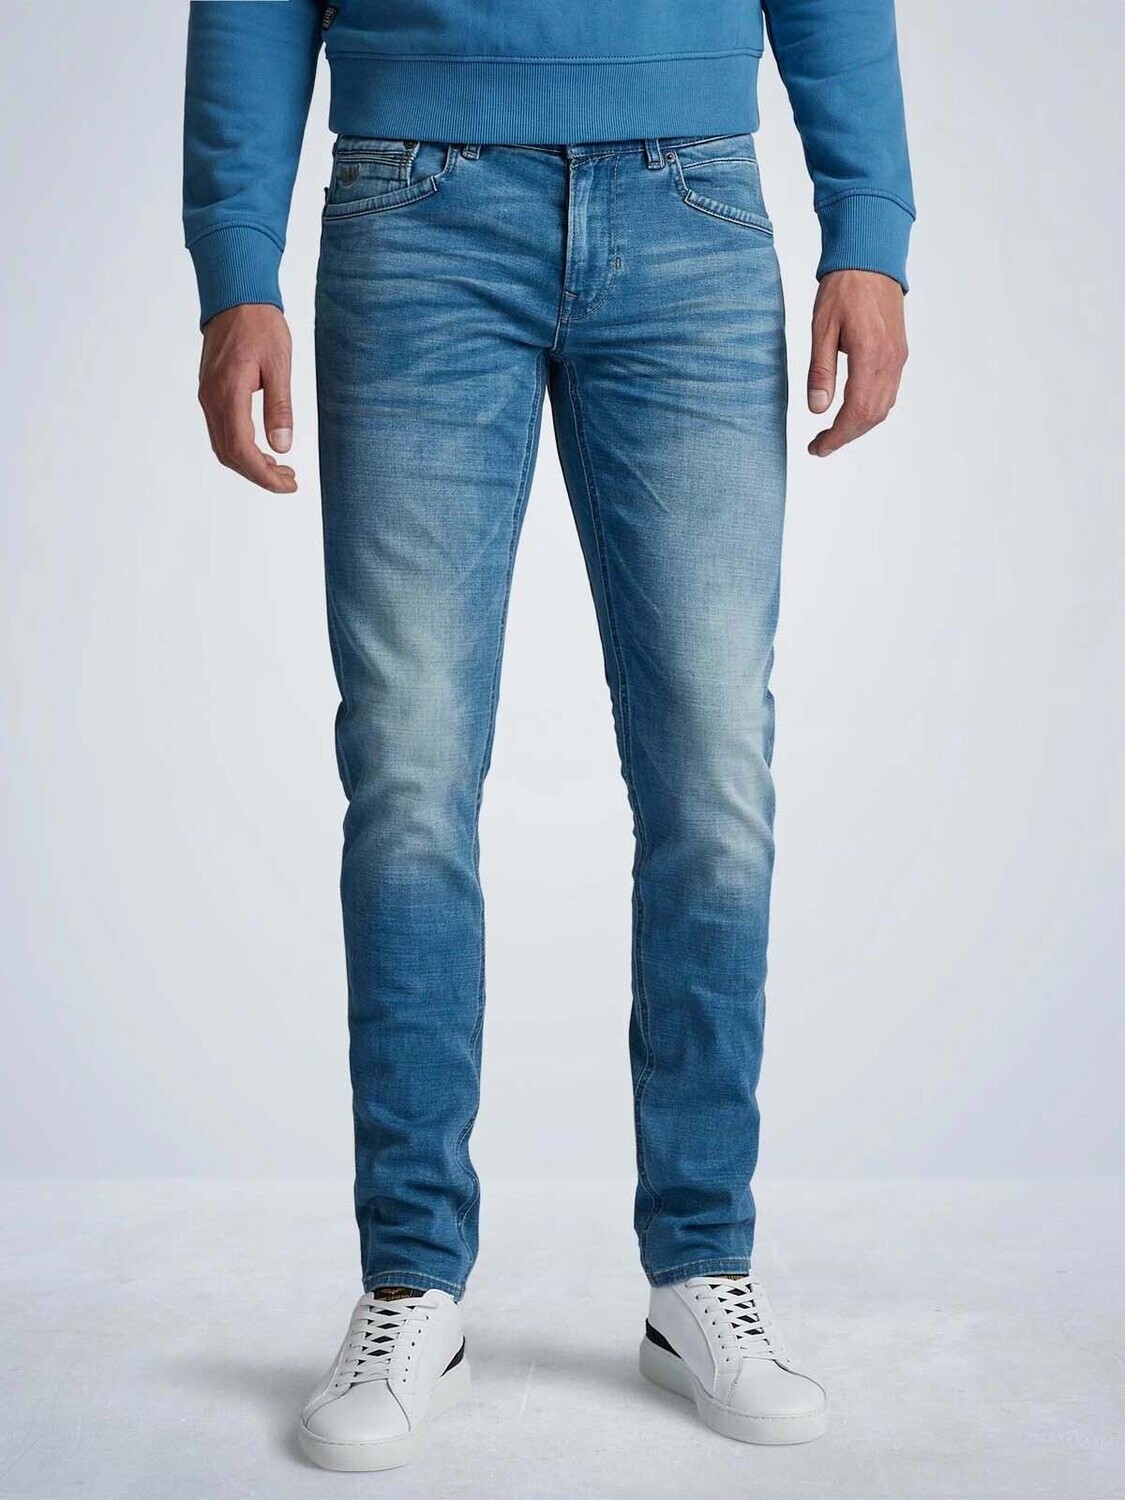 PME Legend | Tailwheel Soft Midblue Jeans